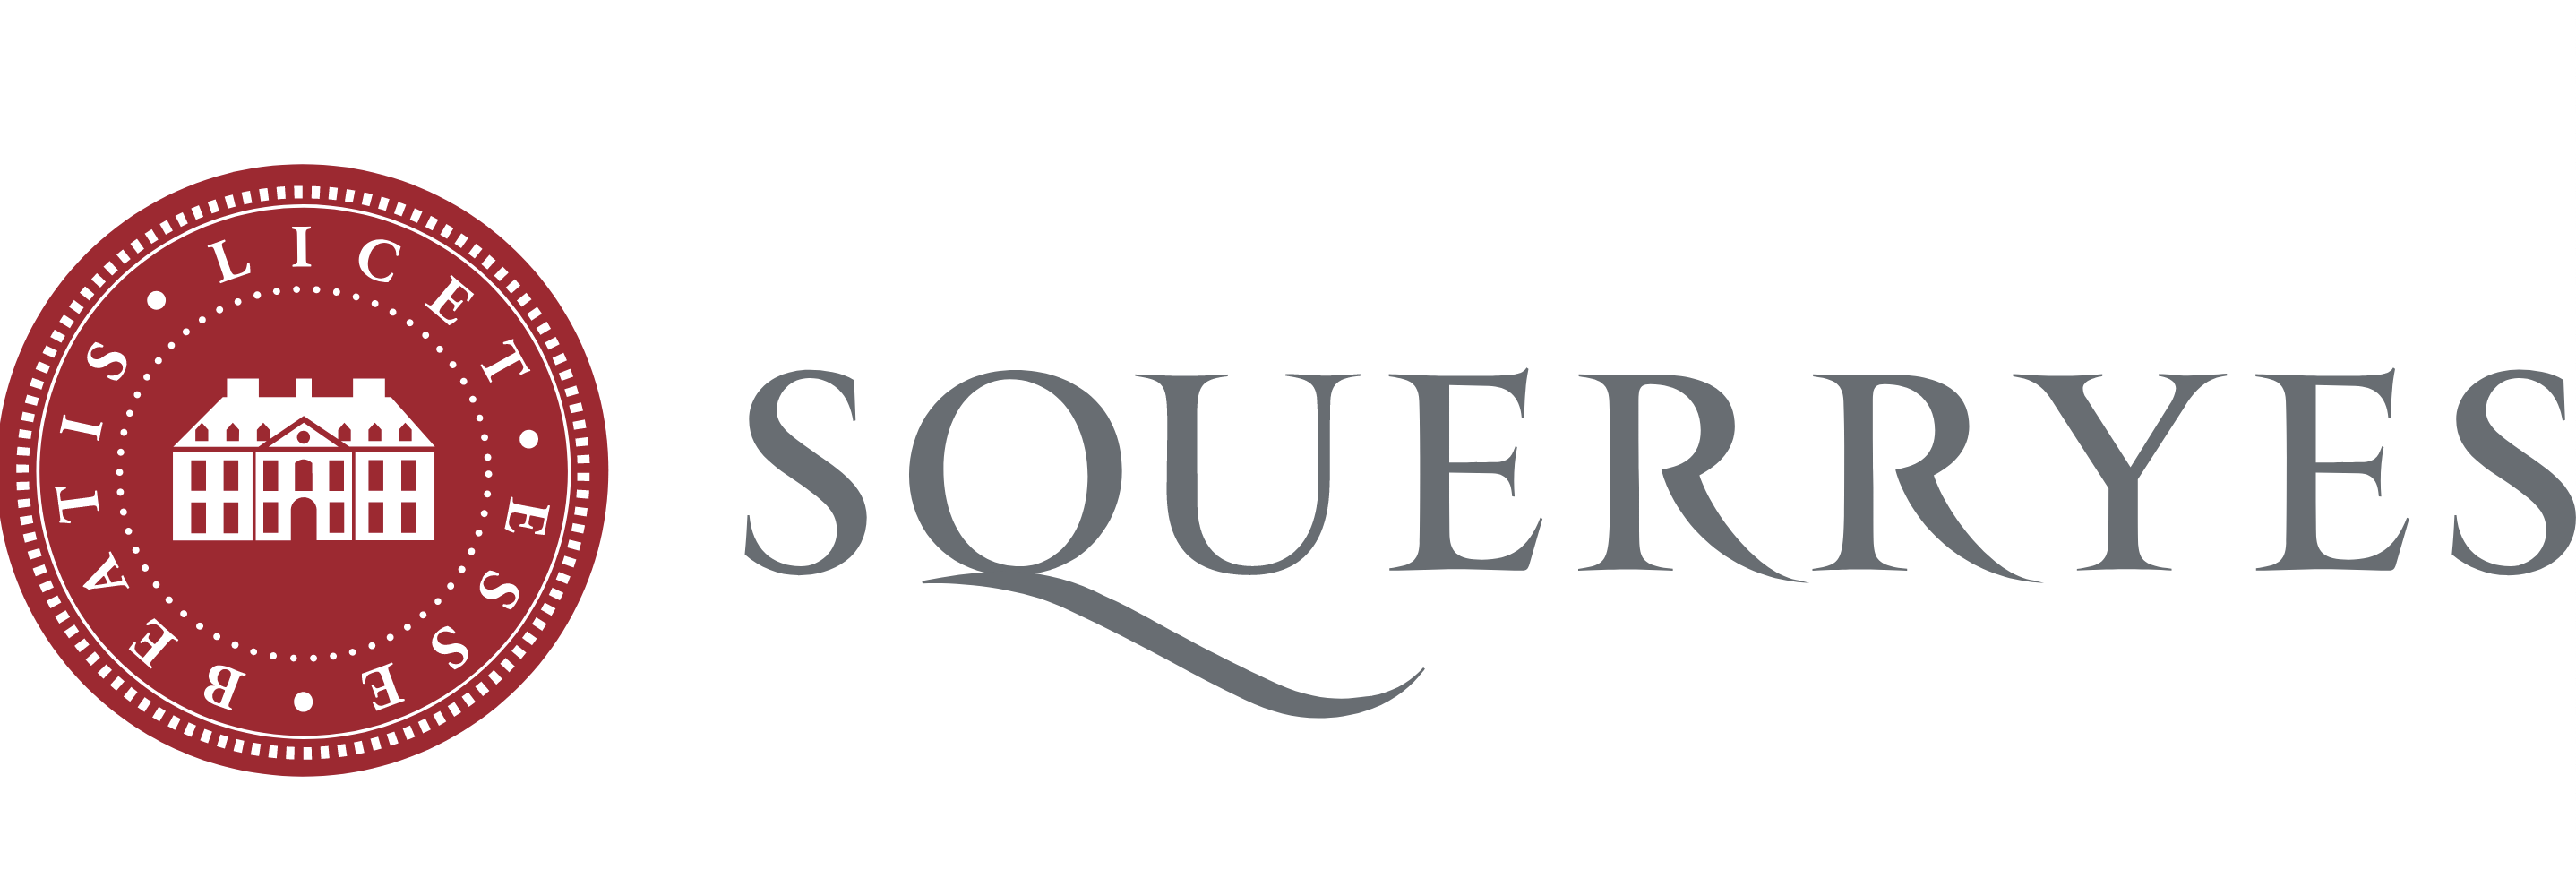 Squerryes Winery Restaurant logo